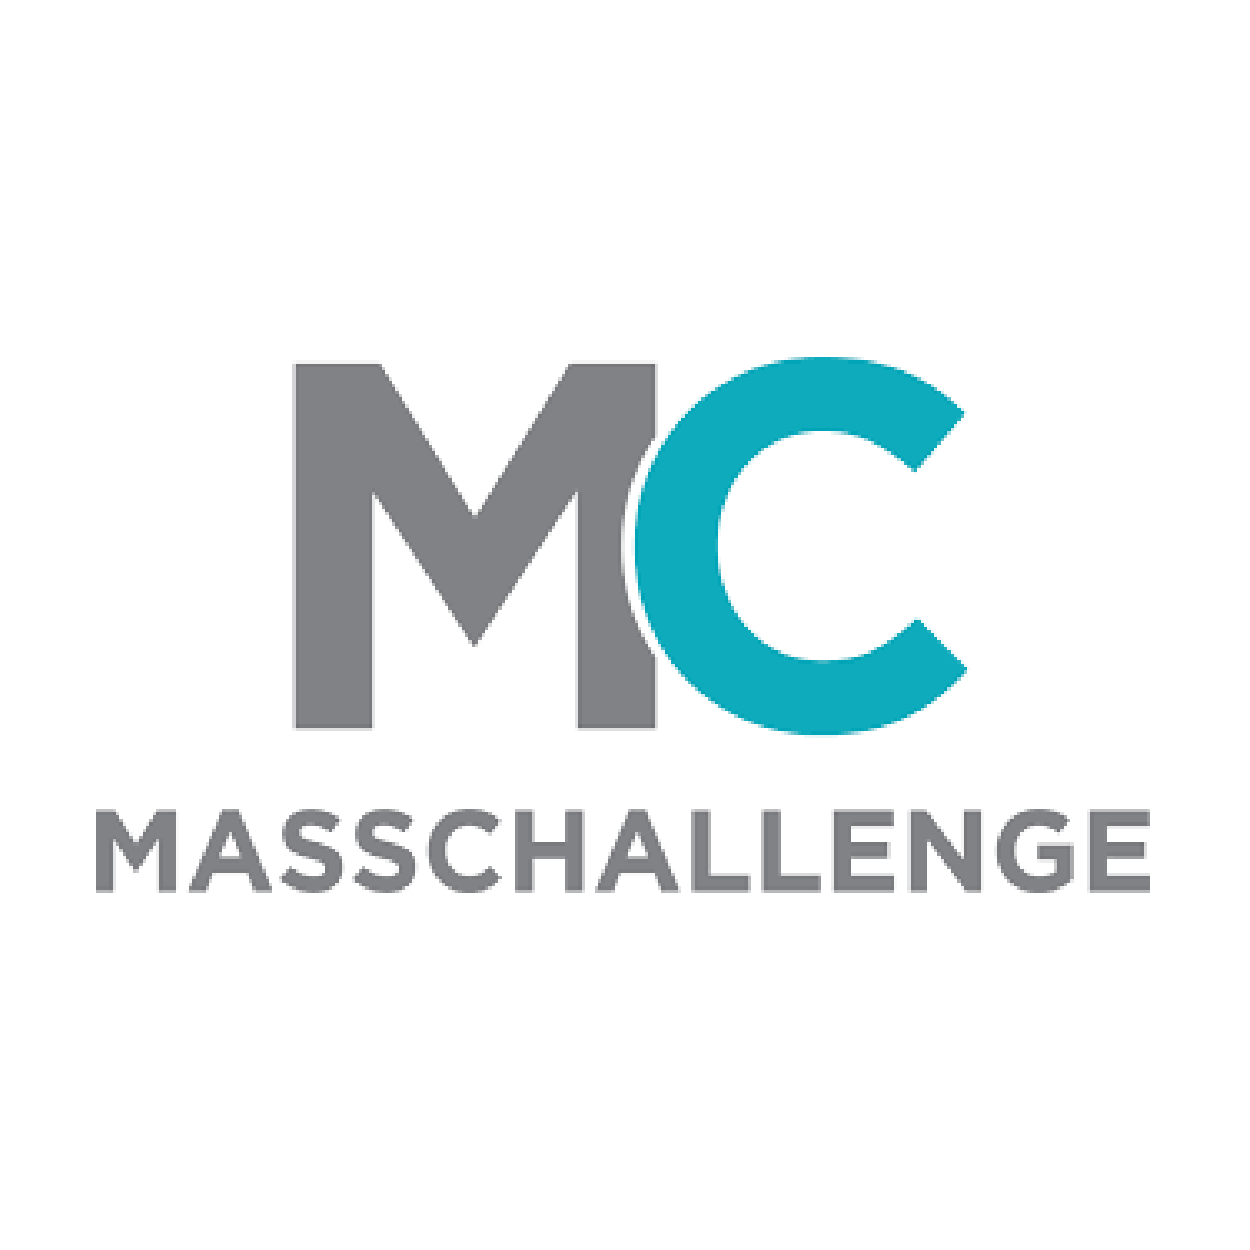 mass challenge-01.png